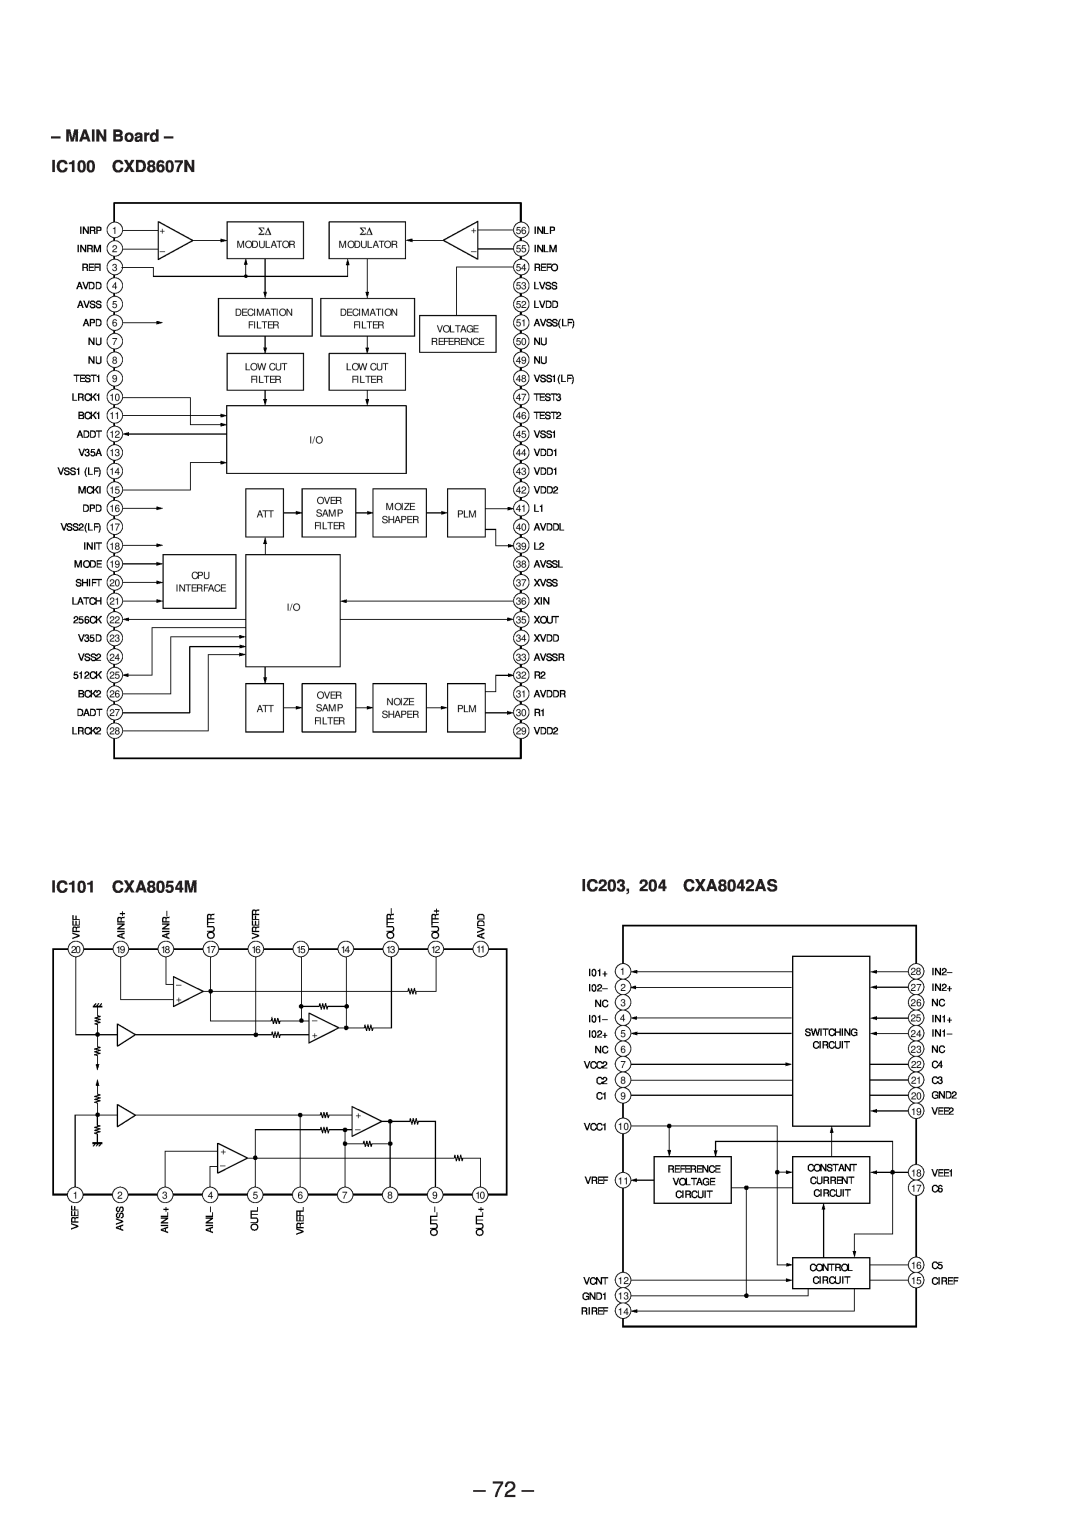 Sony MDS-JB920 service manual 72, MAIN Board, IC100, CXD8607N, IC101, CXA8054M, IC203, CXA8042AS 